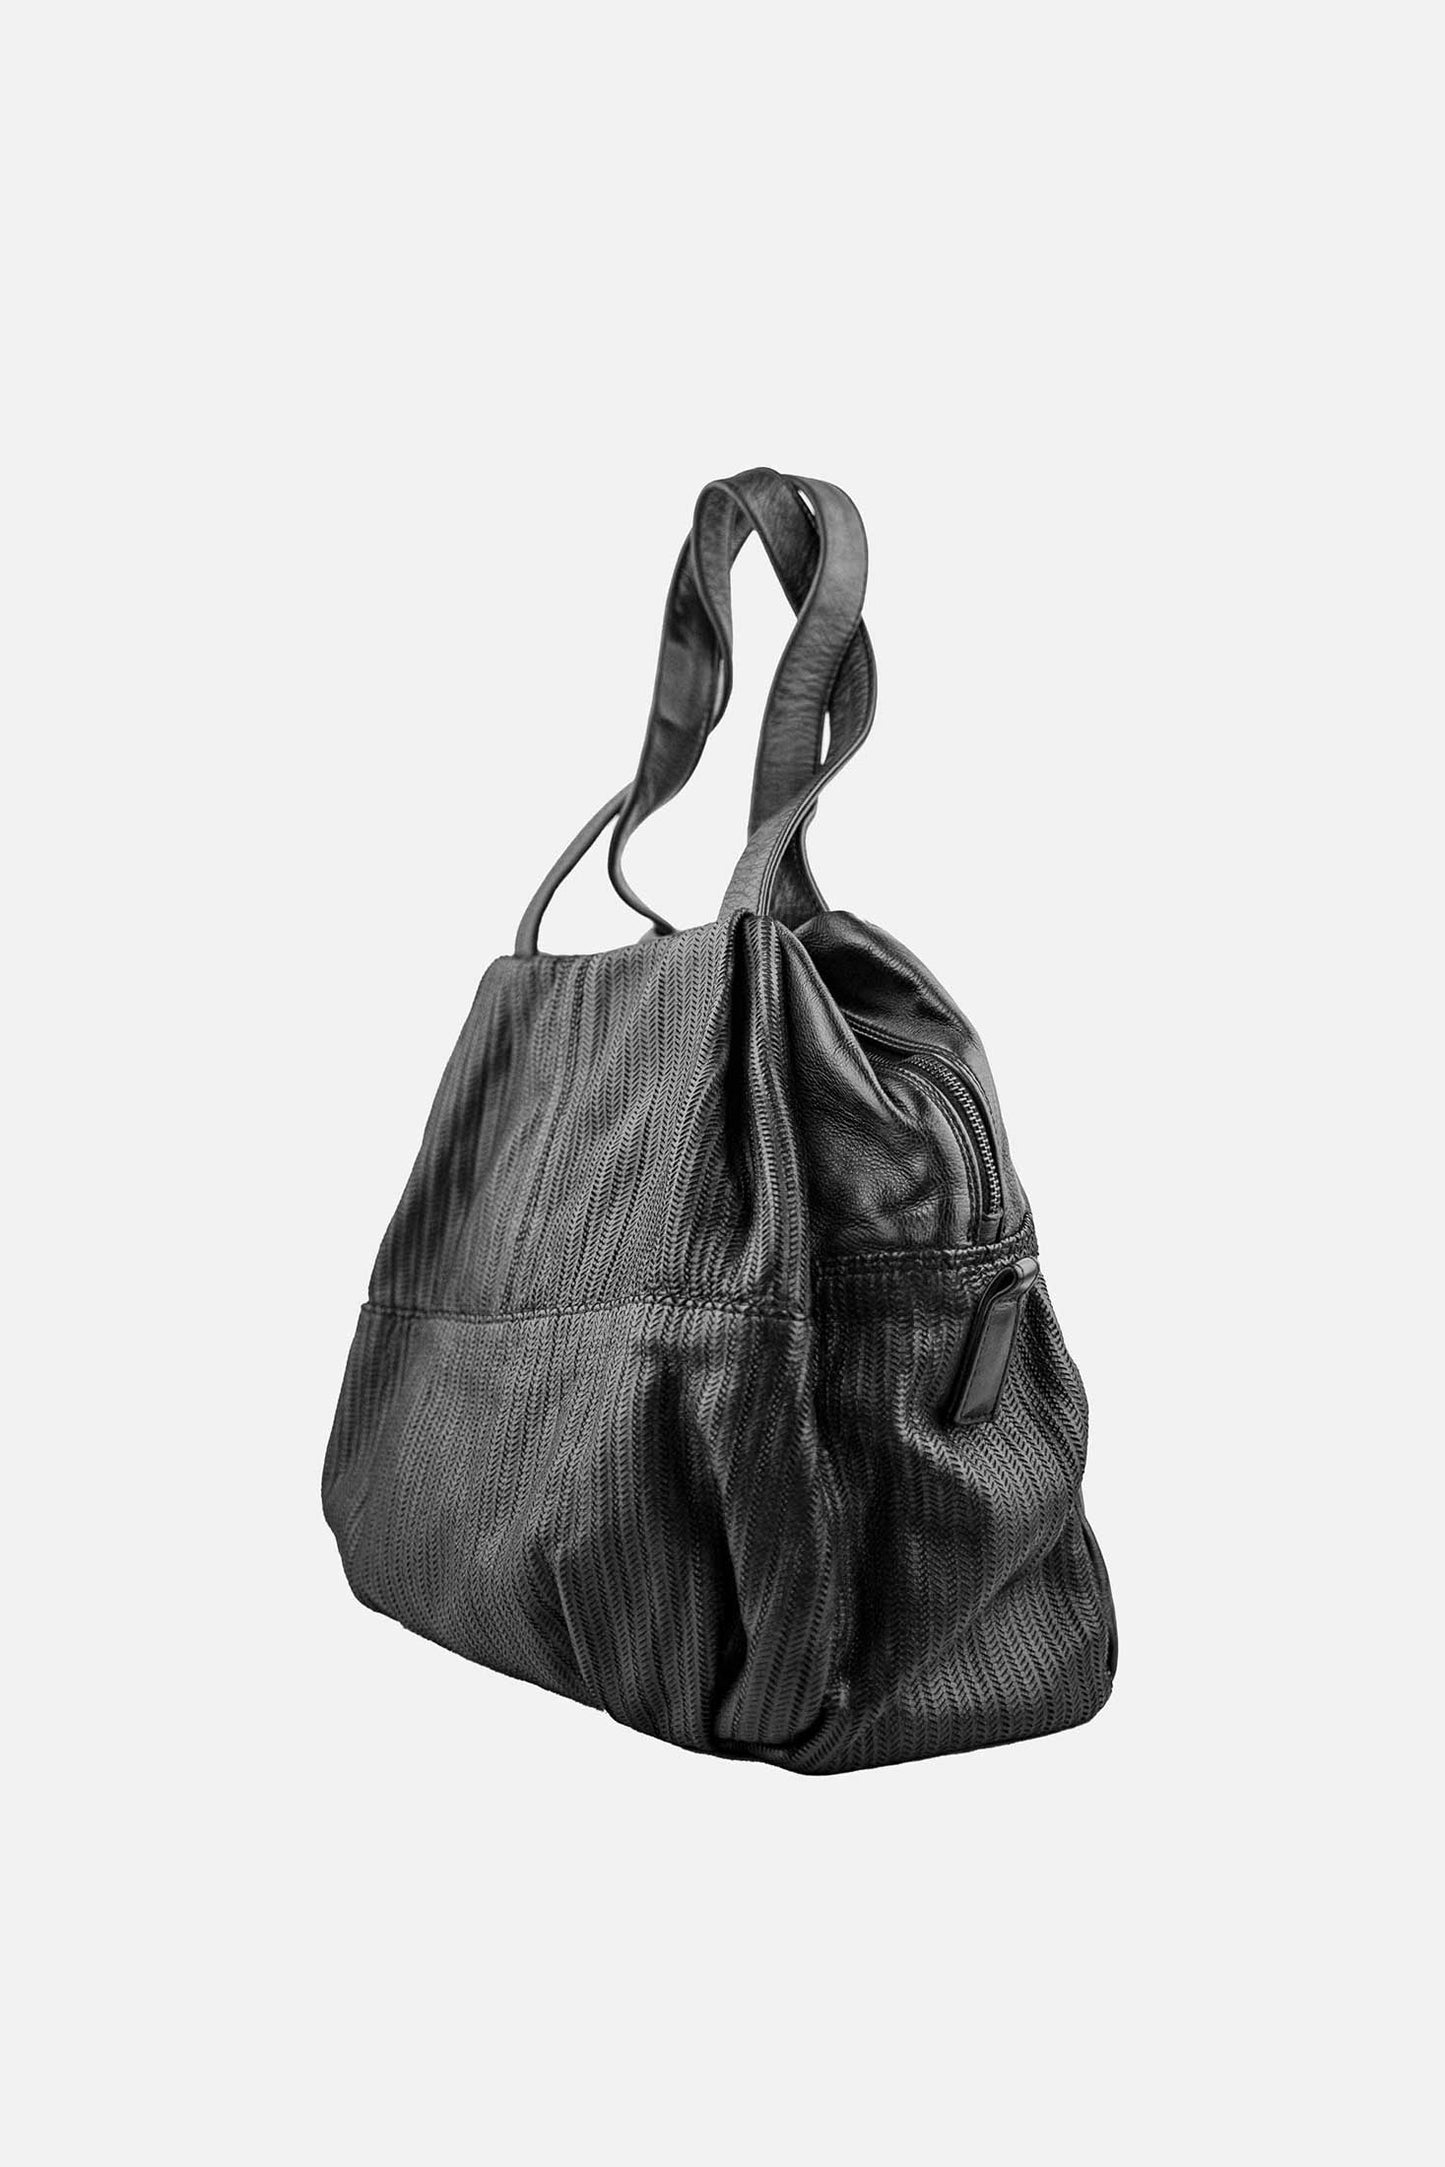 Riri tote bag in black Turner saetta leather